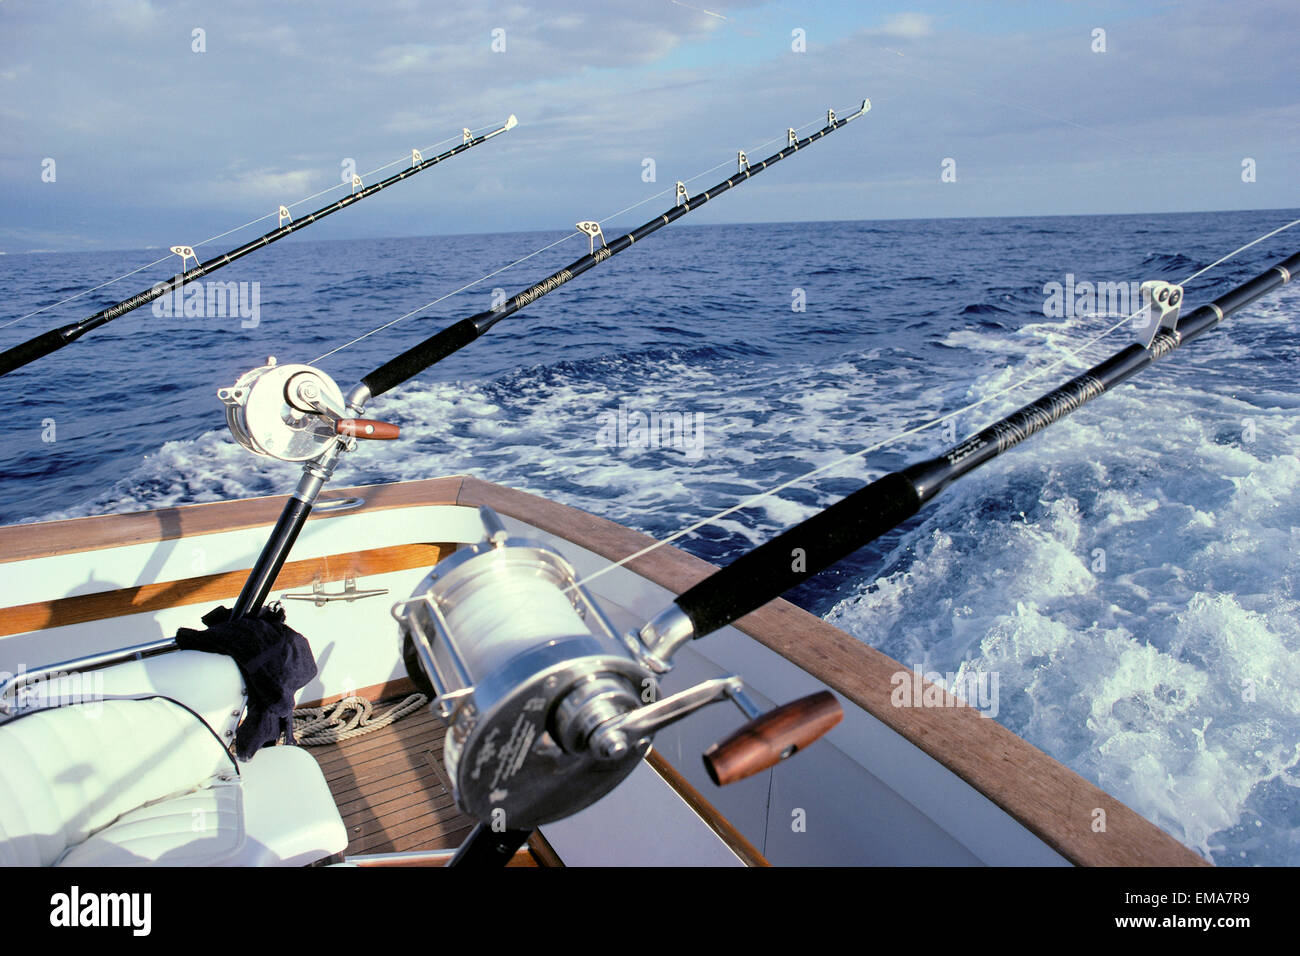 https://c8.alamy.com/comp/EMA7R9/hawaii-close-up-of-fishing-rods-and-reels-on-a-boat-deep-sea-fishing-EMA7R9.jpg